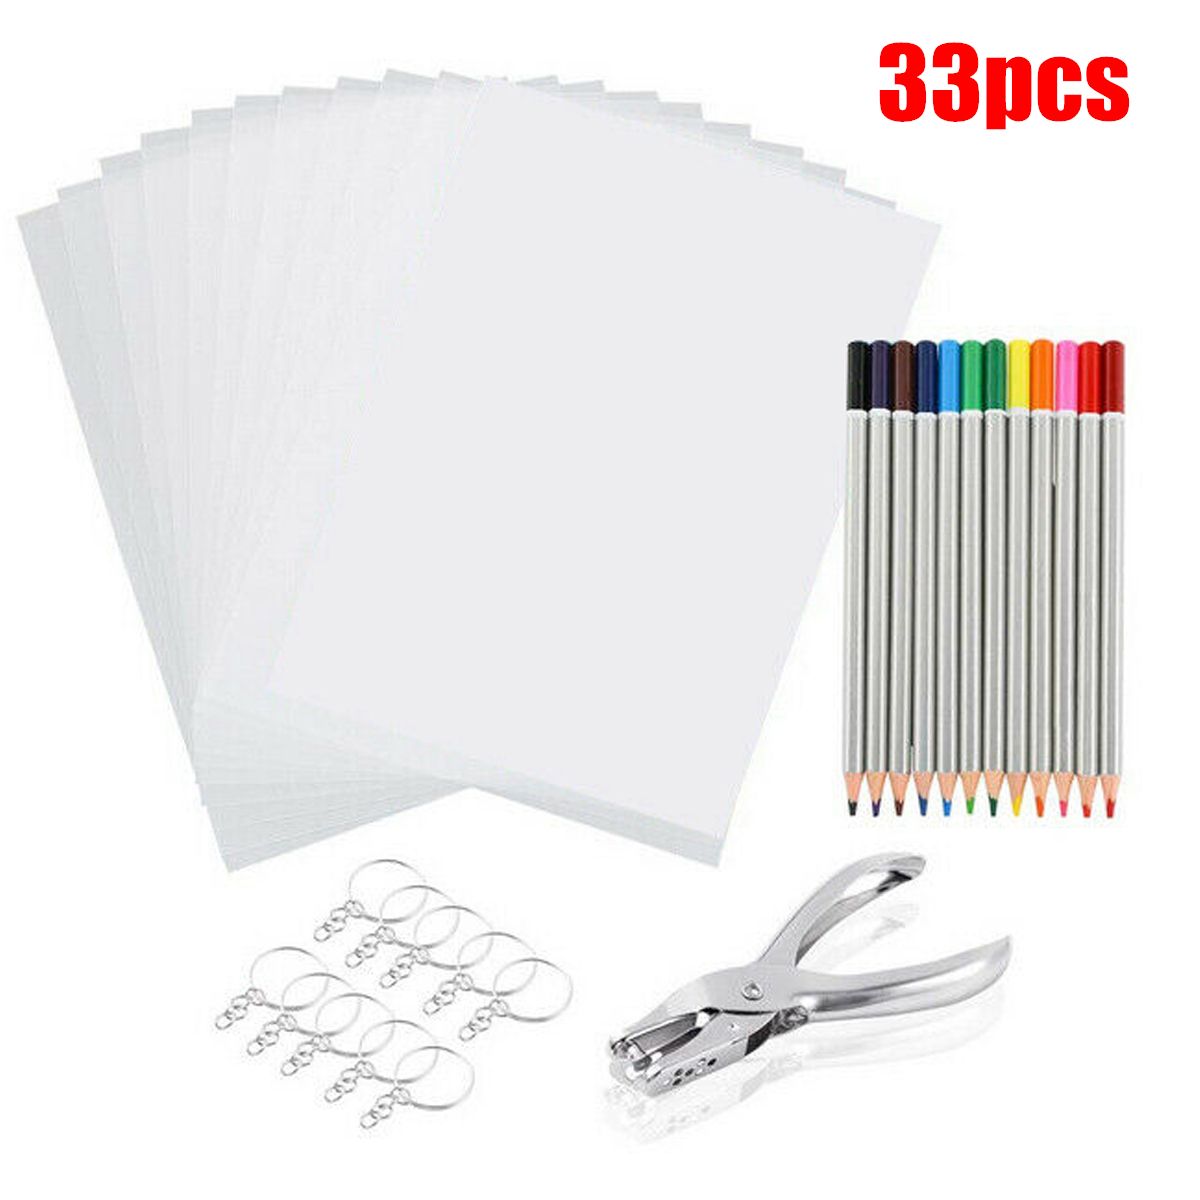 DIY-Heat-Shrink-Plastic-Sheet-Kit-Shrinky-Art-Paper-Hole-Punch-Keychains-Pencils-Materials-1742756